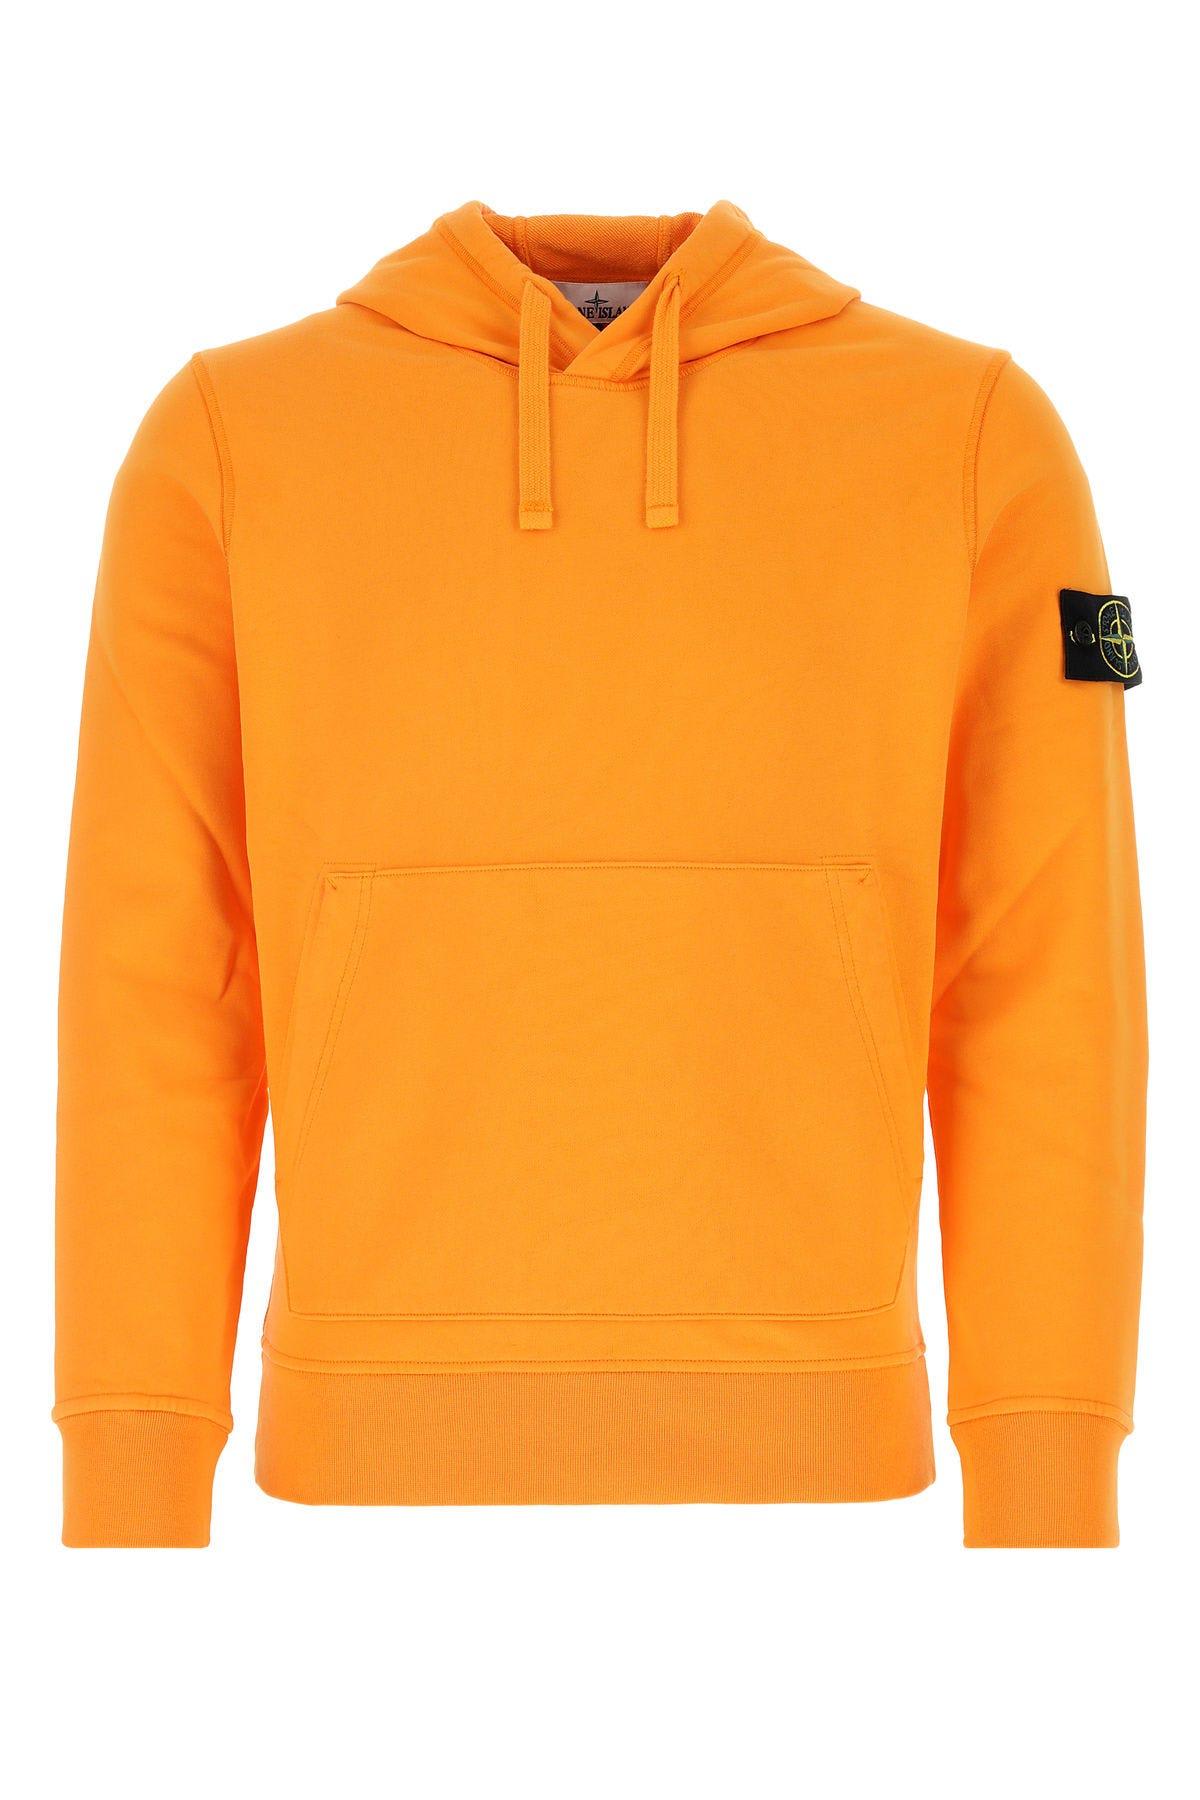 Stone Island Orange Cotton Sweatshirt